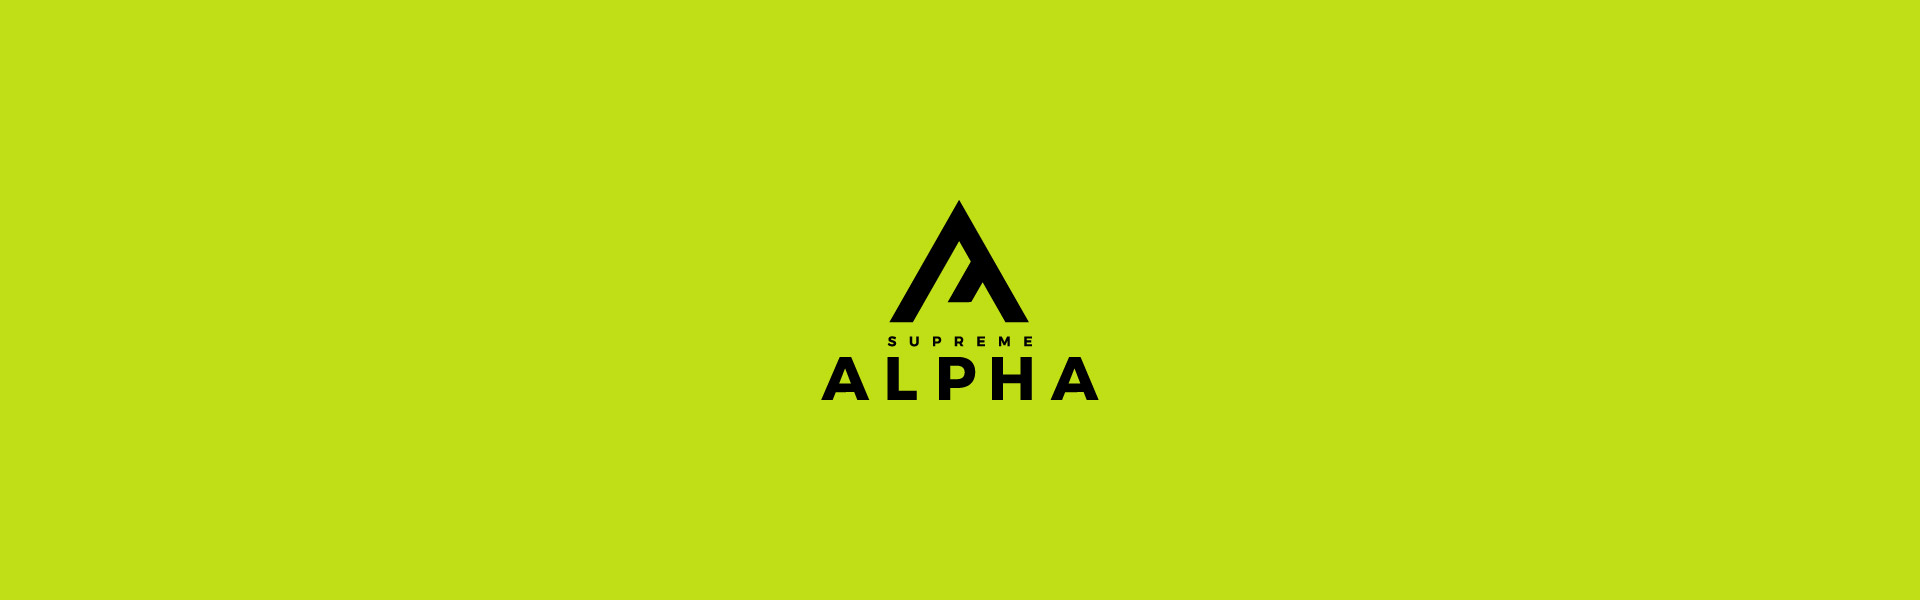 Logos-Instudio-Supreme-Alpha